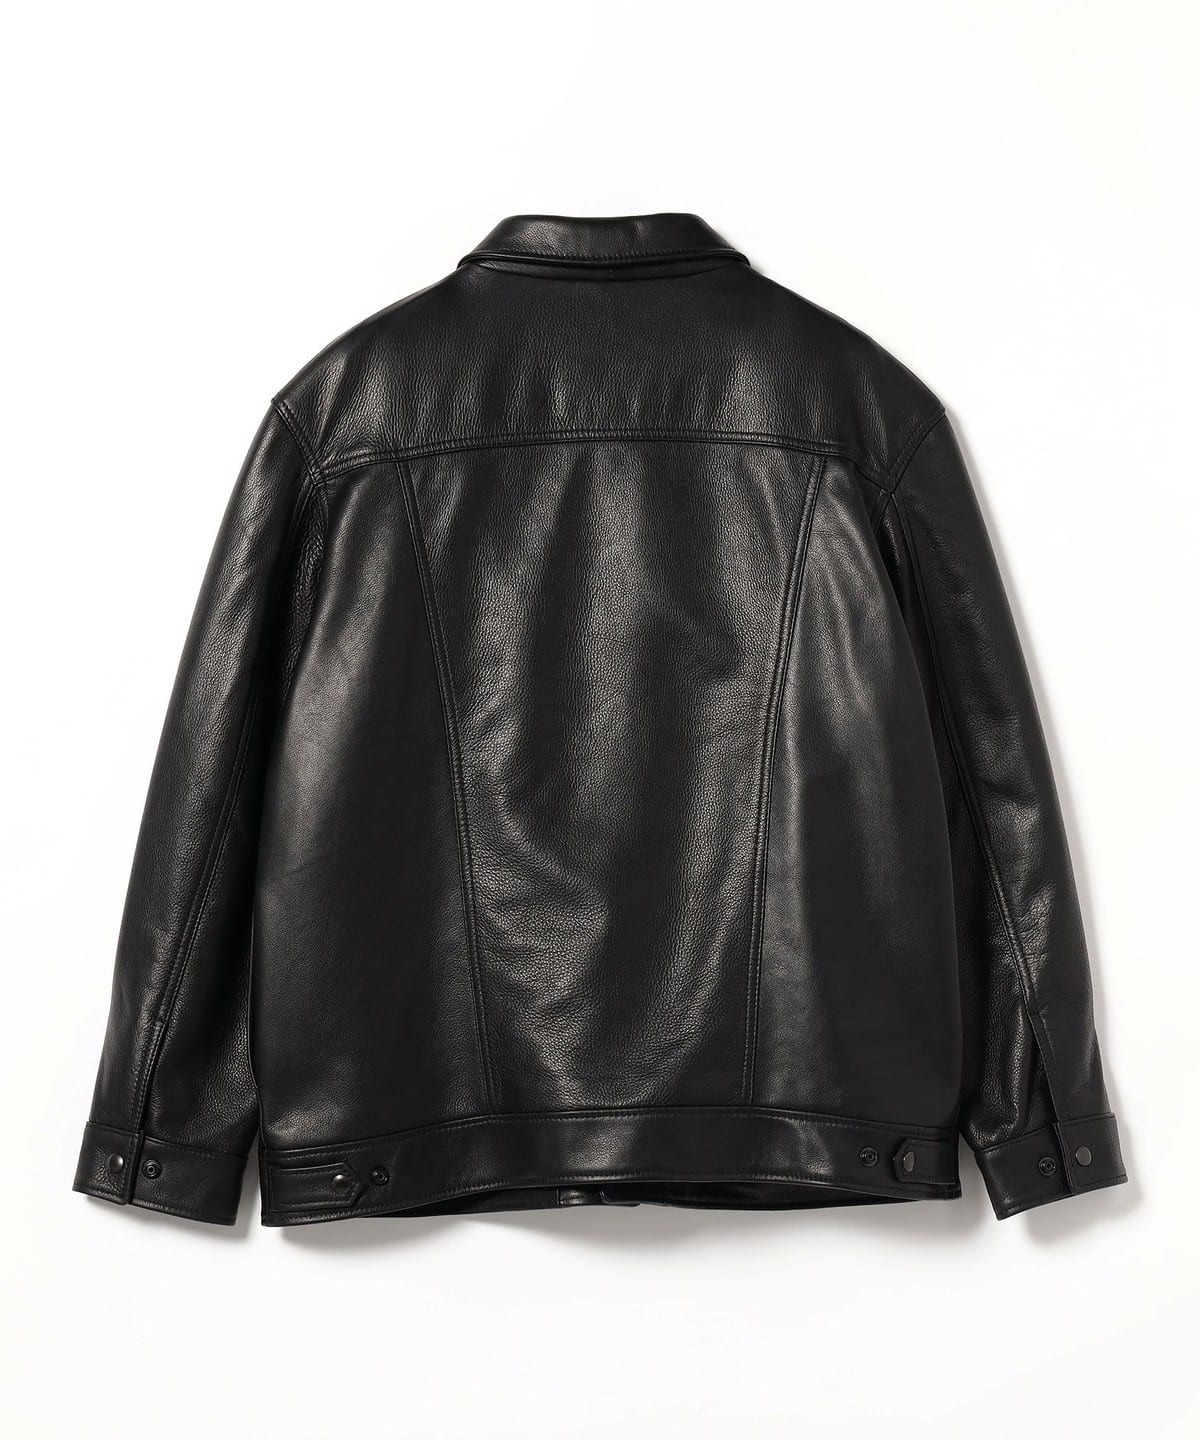 BEAMS PLUS / Trucker jacket Leather - レザーブルゾン